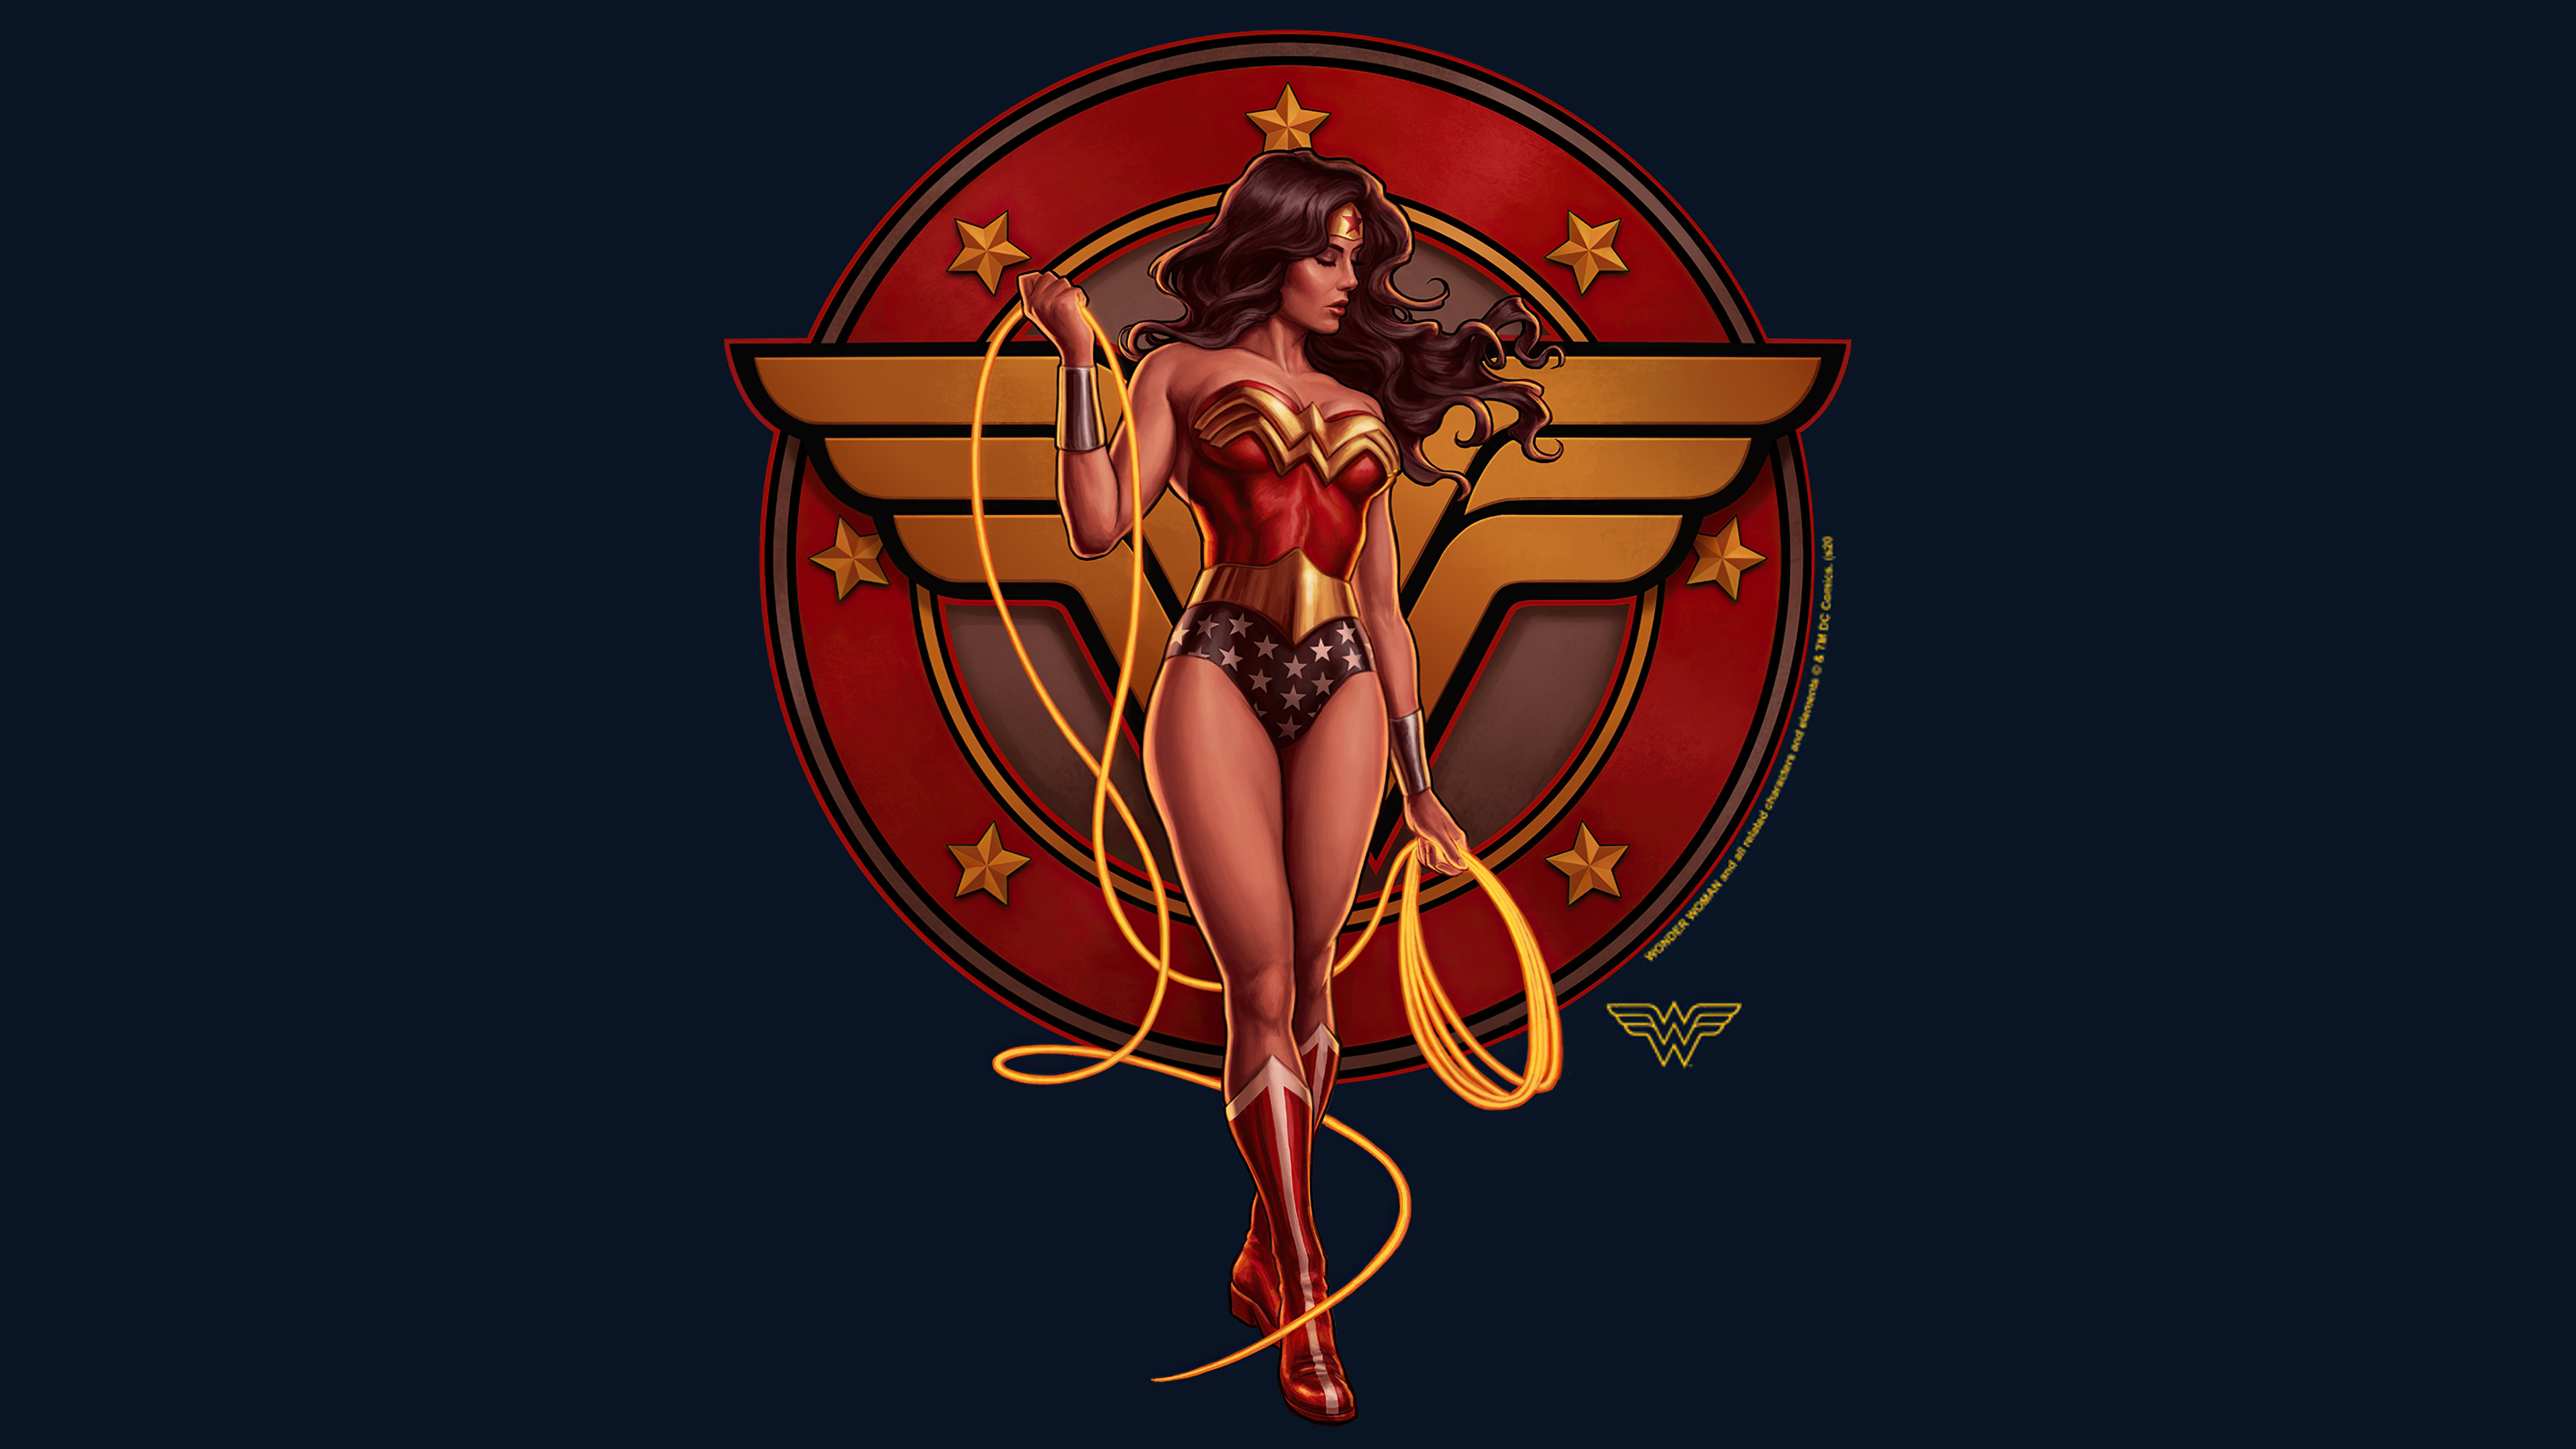 4K Wonder Woman Minimalism 2020 Wallpapers